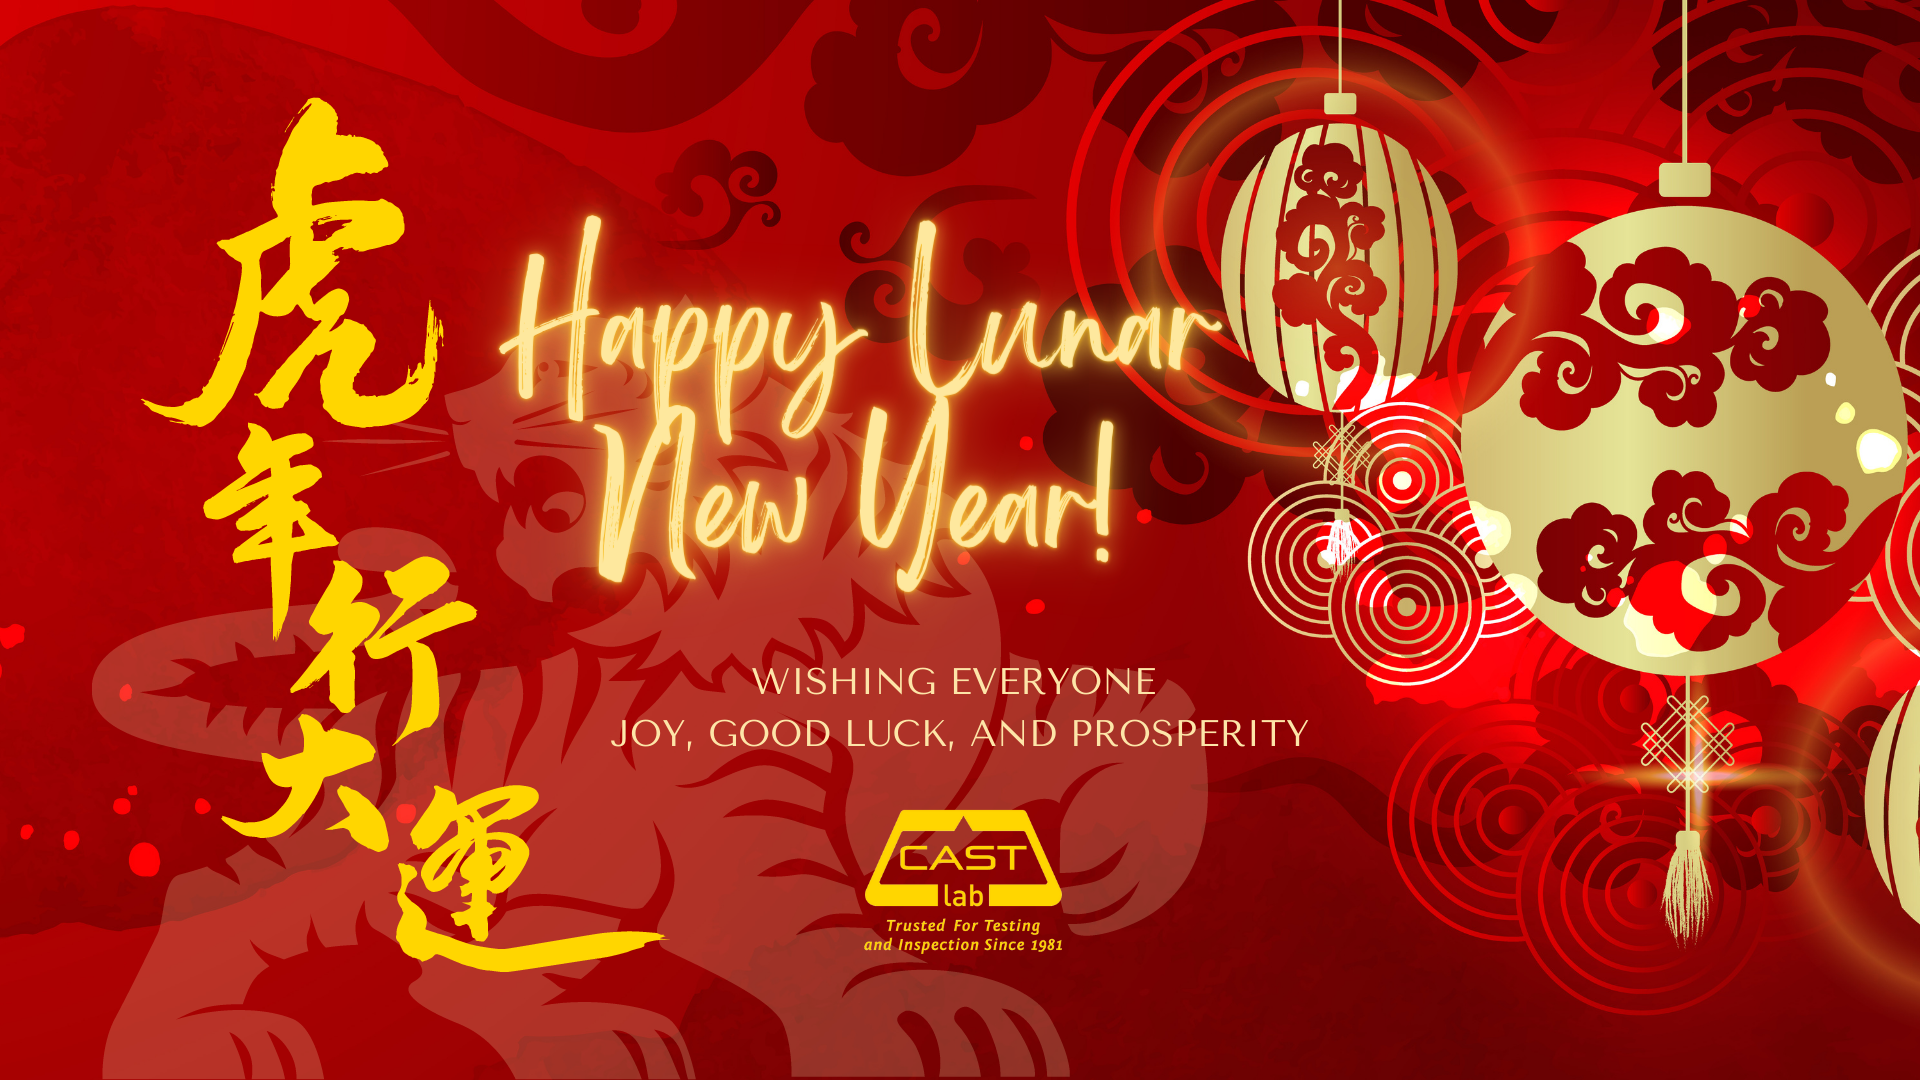 Lunar New Year 2022 Office Closure